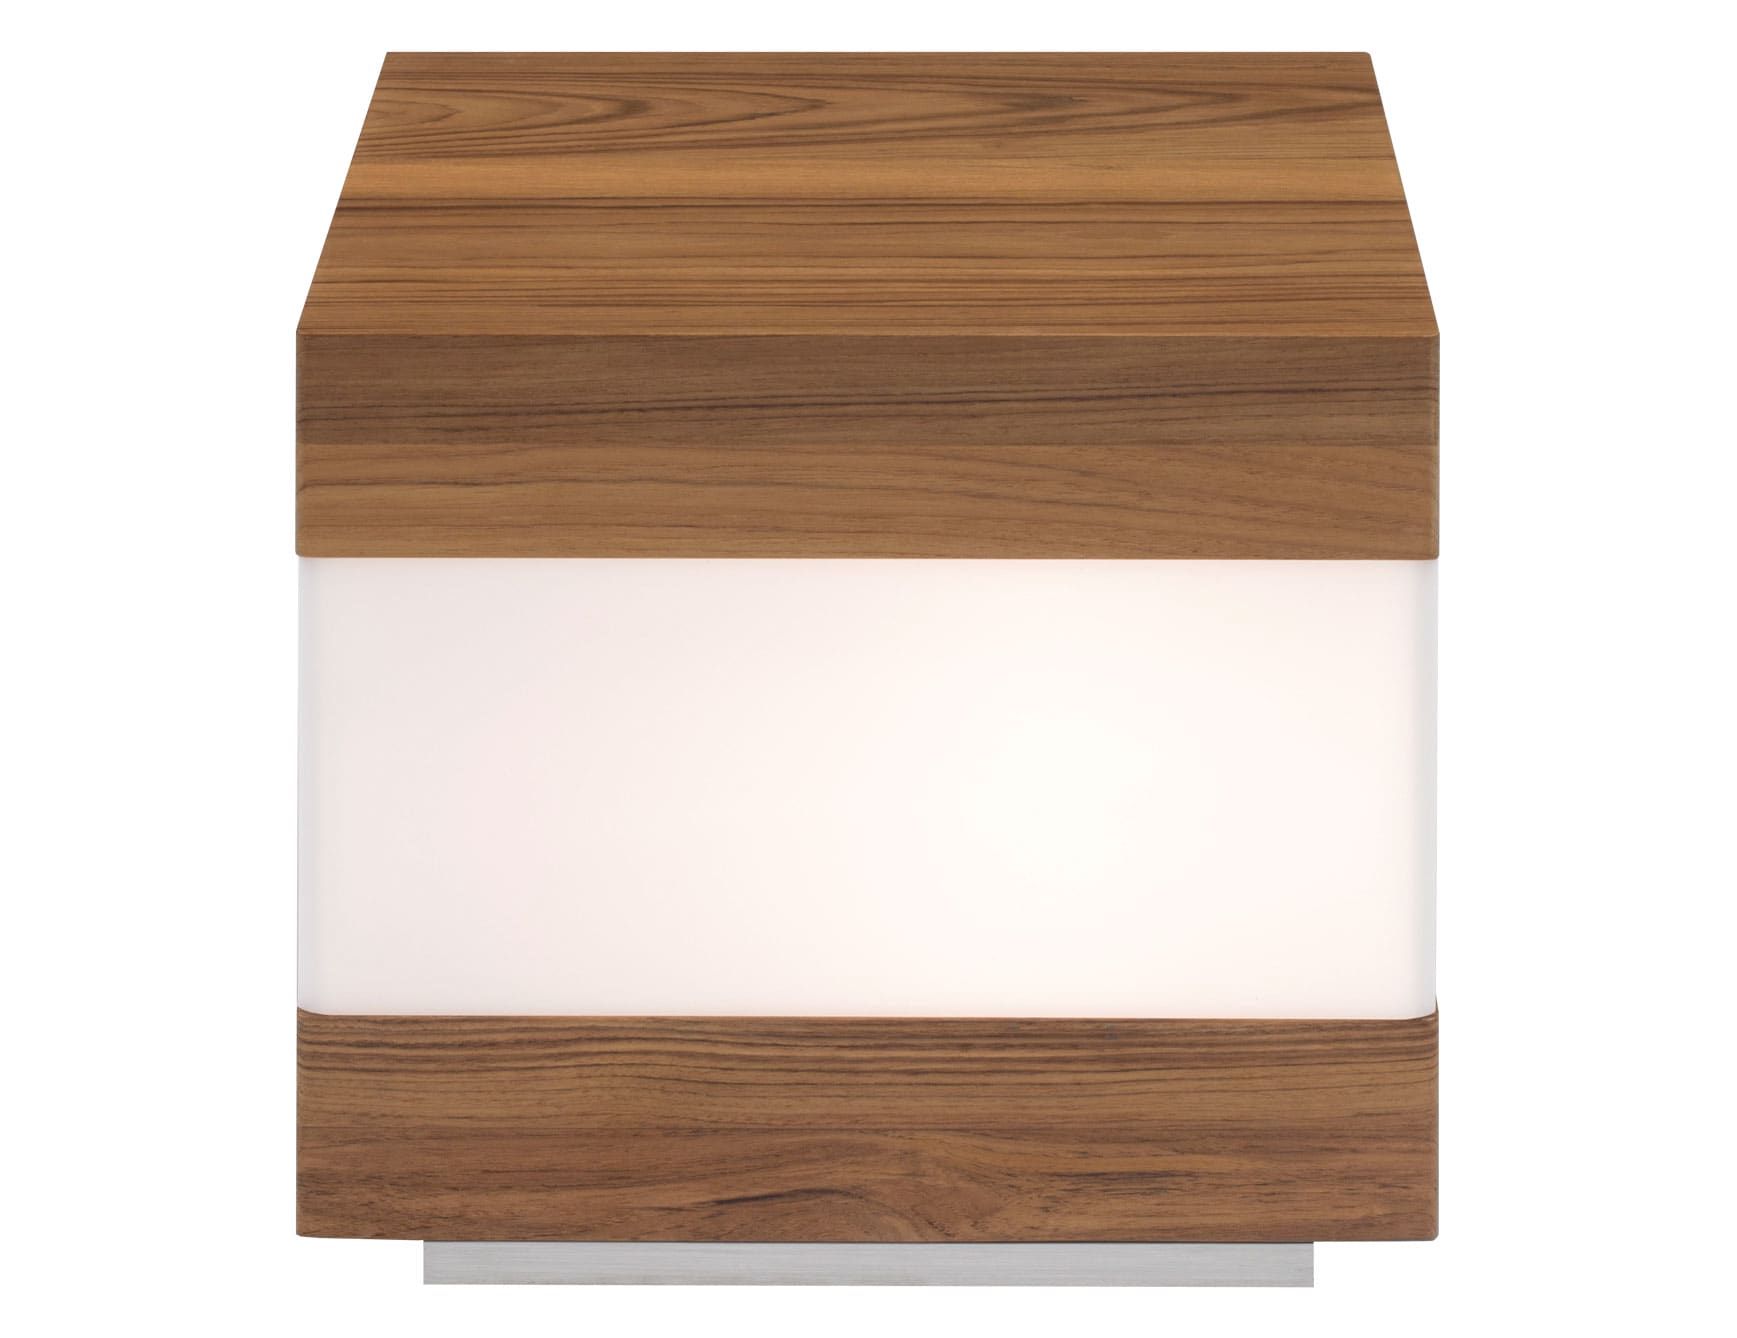 Koi modern Italian floor lamp with brown teak wood